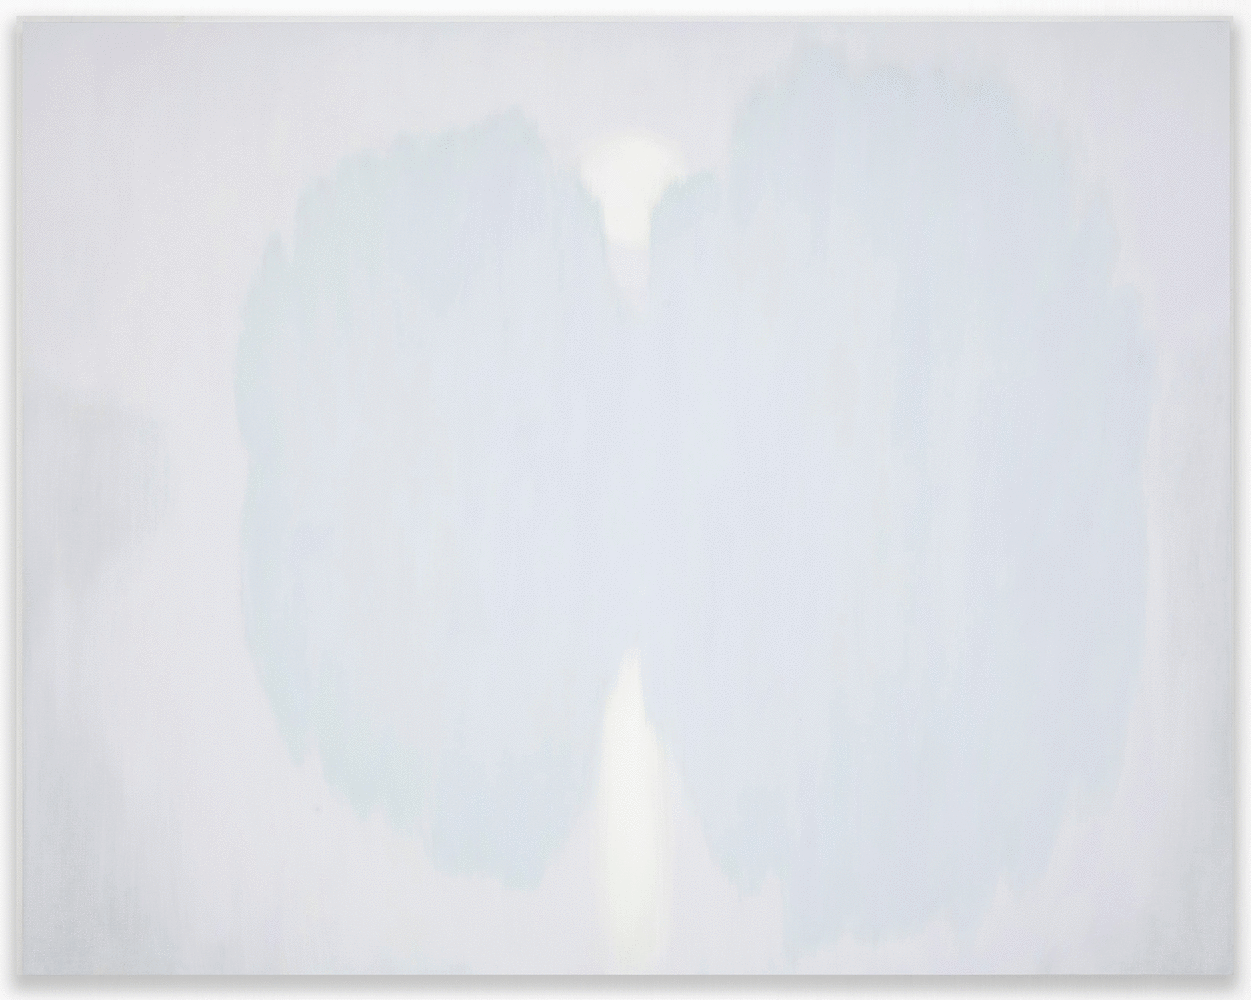 Robert Zandvliet
Griis, 2020
Egg tempera on linen
83 7/8 x 106 1/4 inches (213 x 270 cm)
(RZ2020/35)